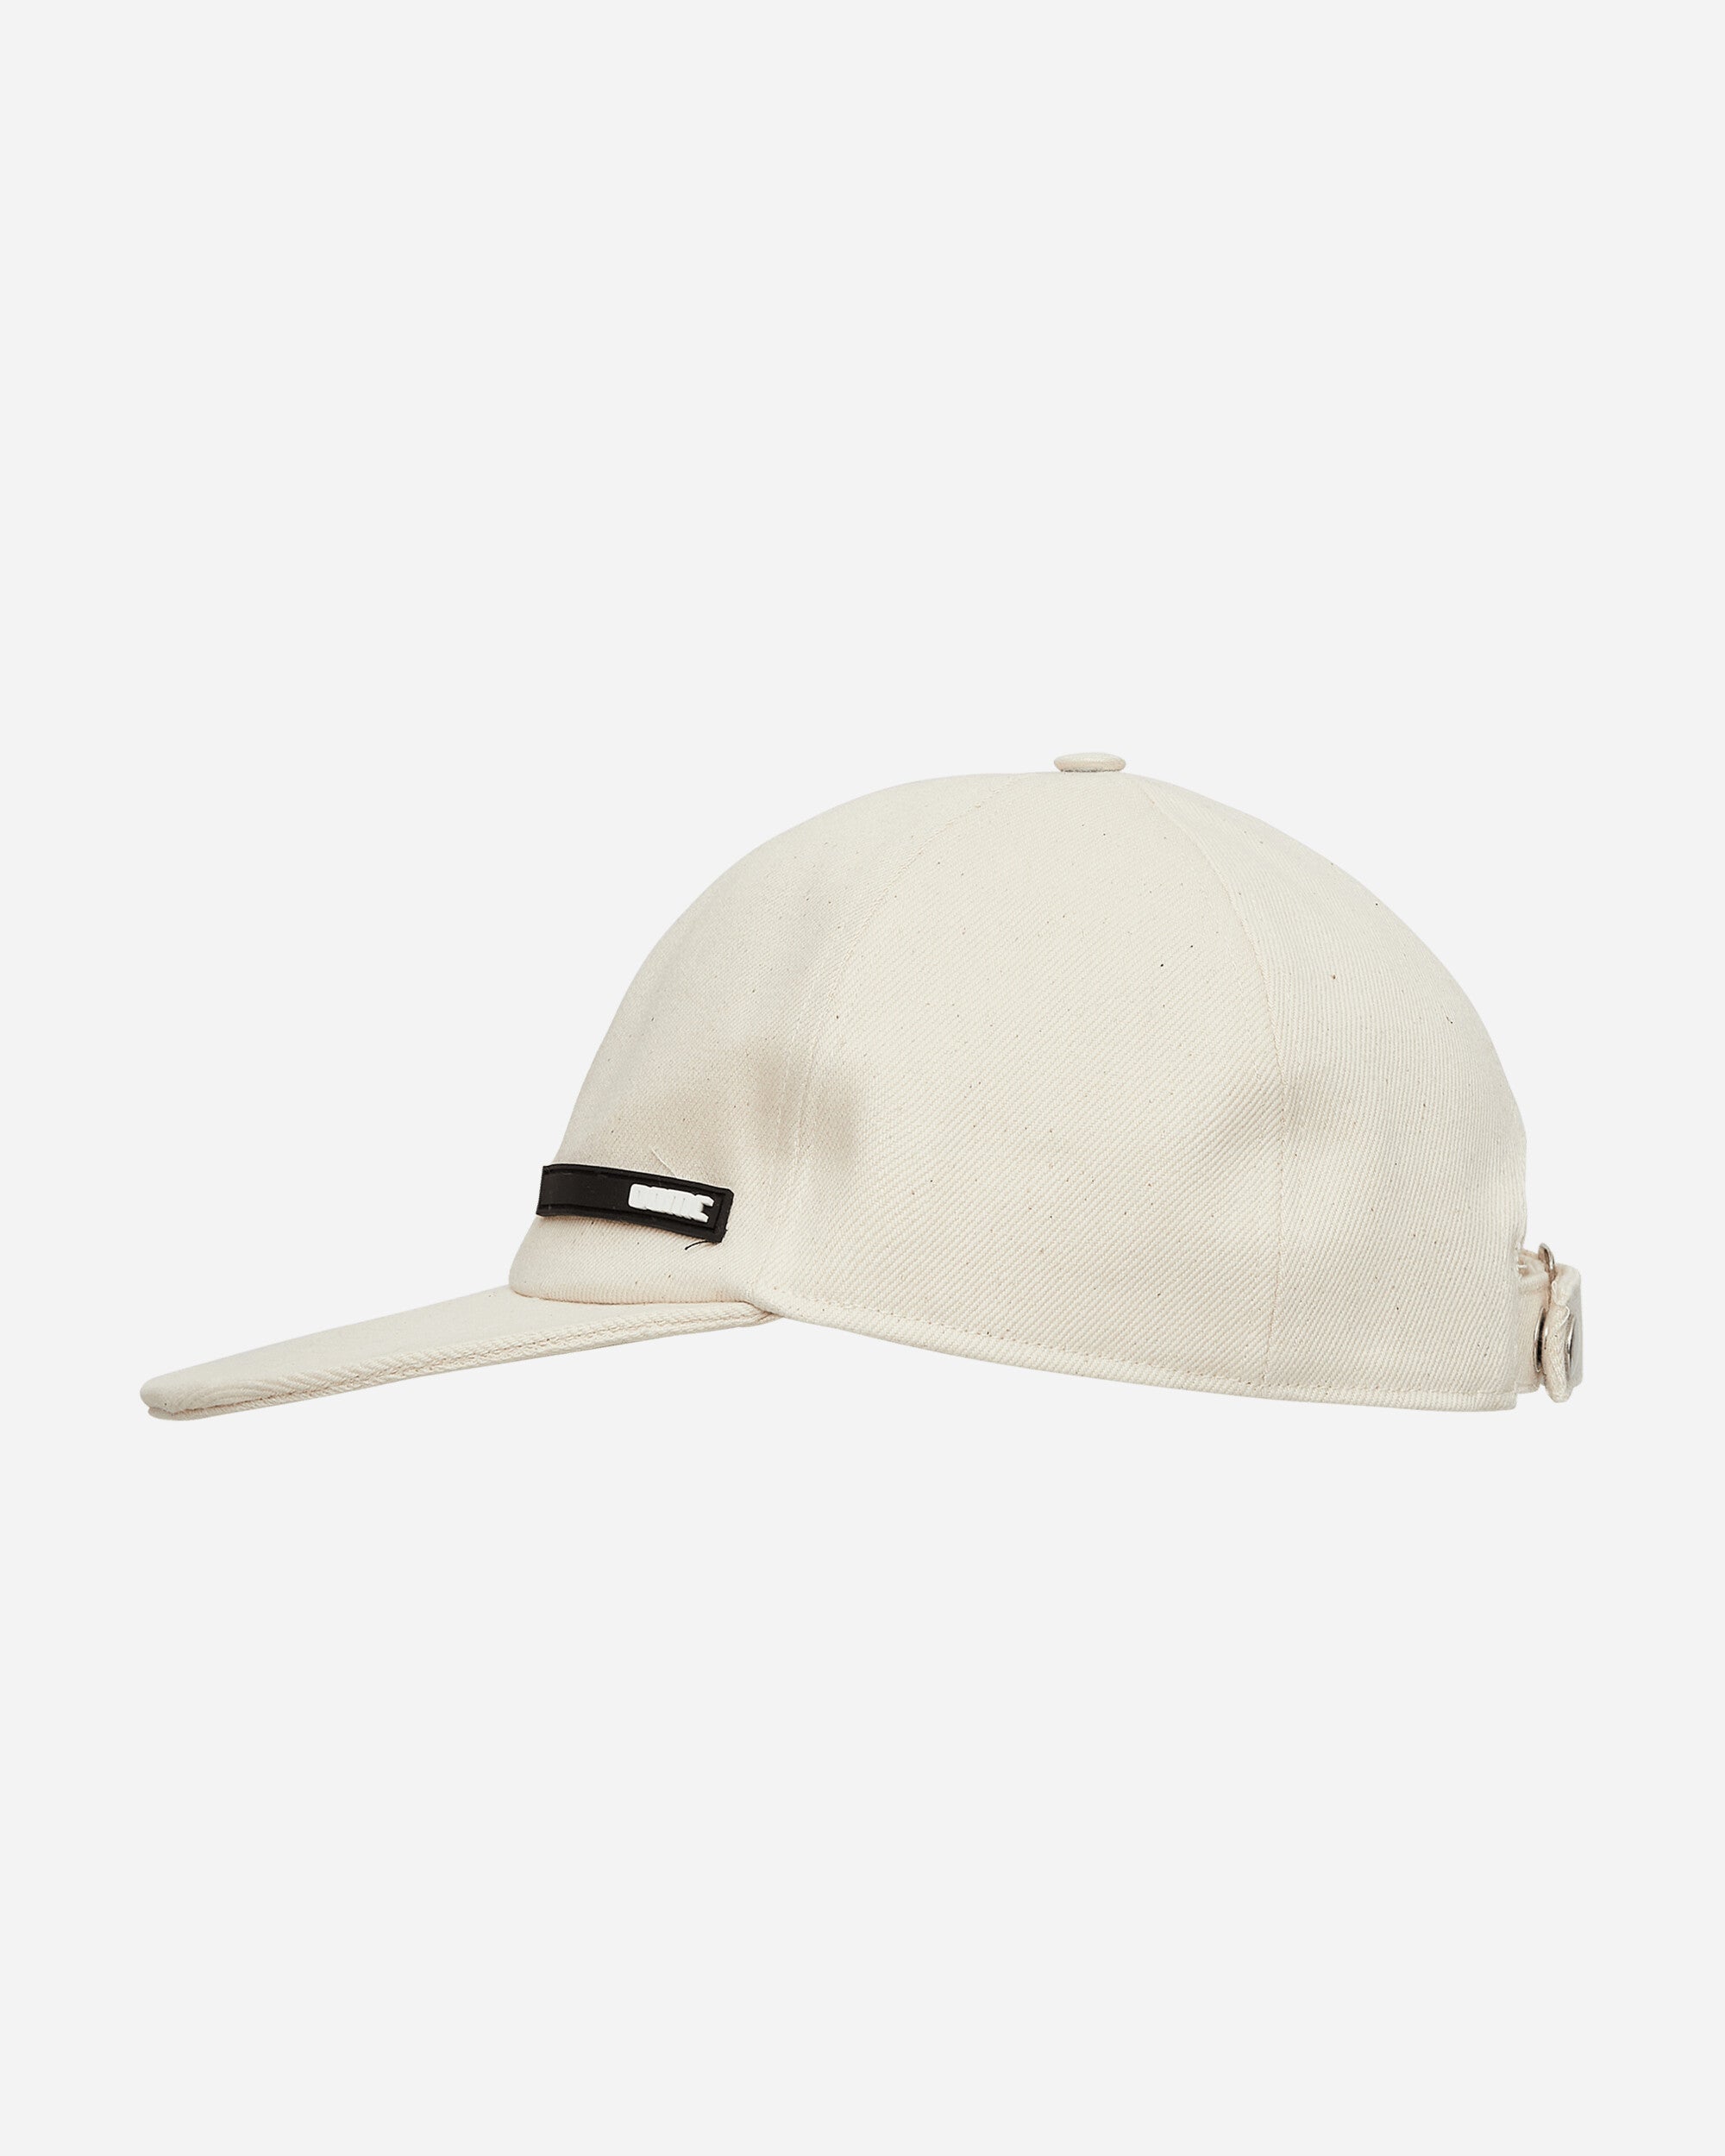 OAMC Ball Cap, Raw Natural White Hats Caps 24E28OAB08C 108